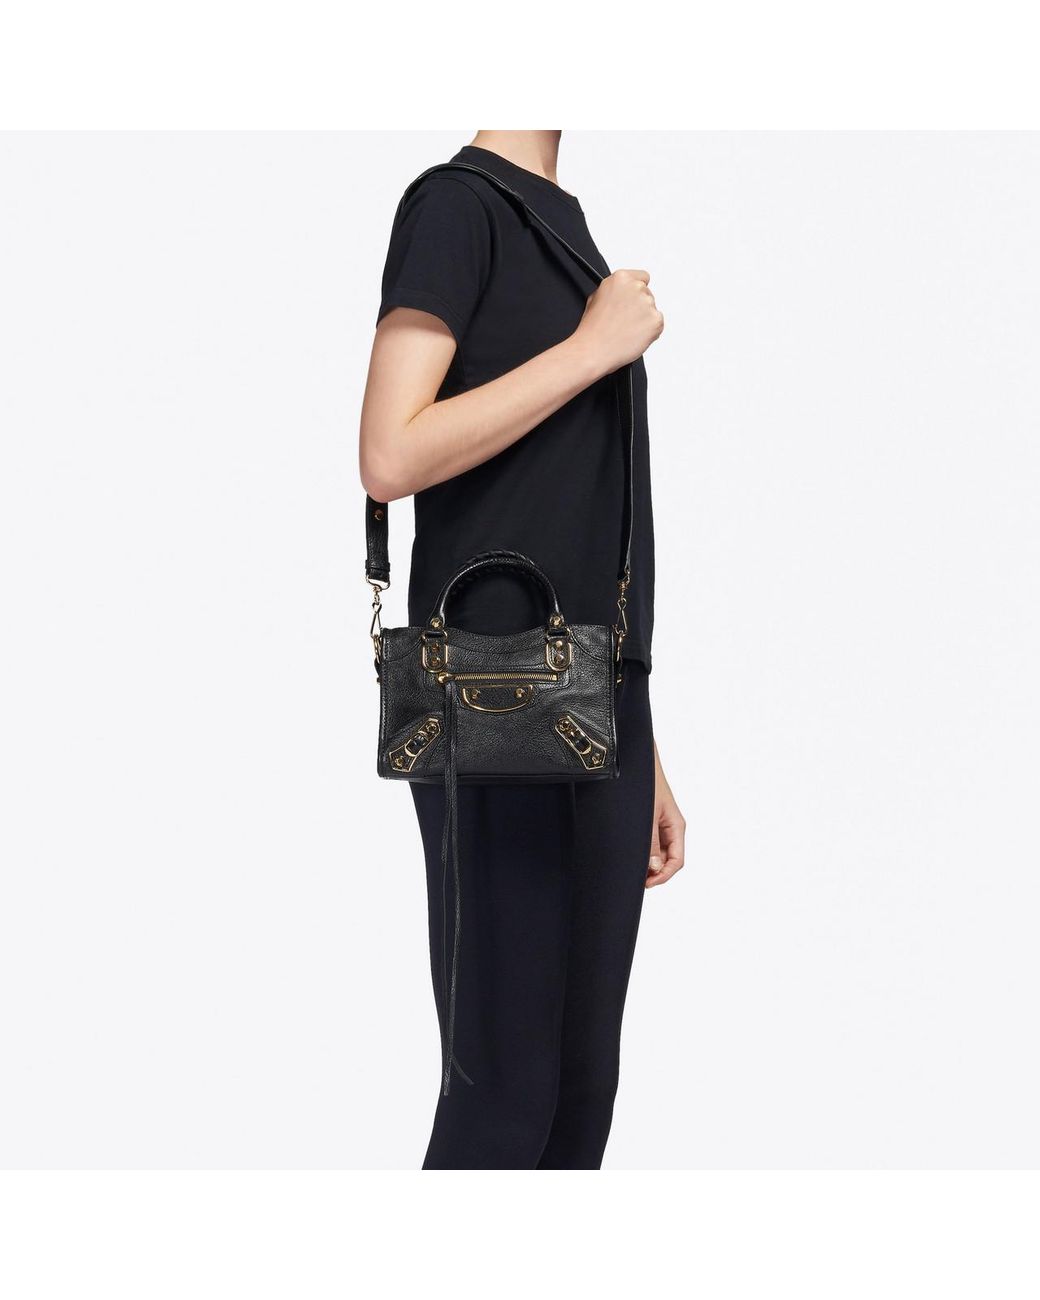 Balenciaga Metallic Edge City Mini Shoulder Bag in Black | Lyst